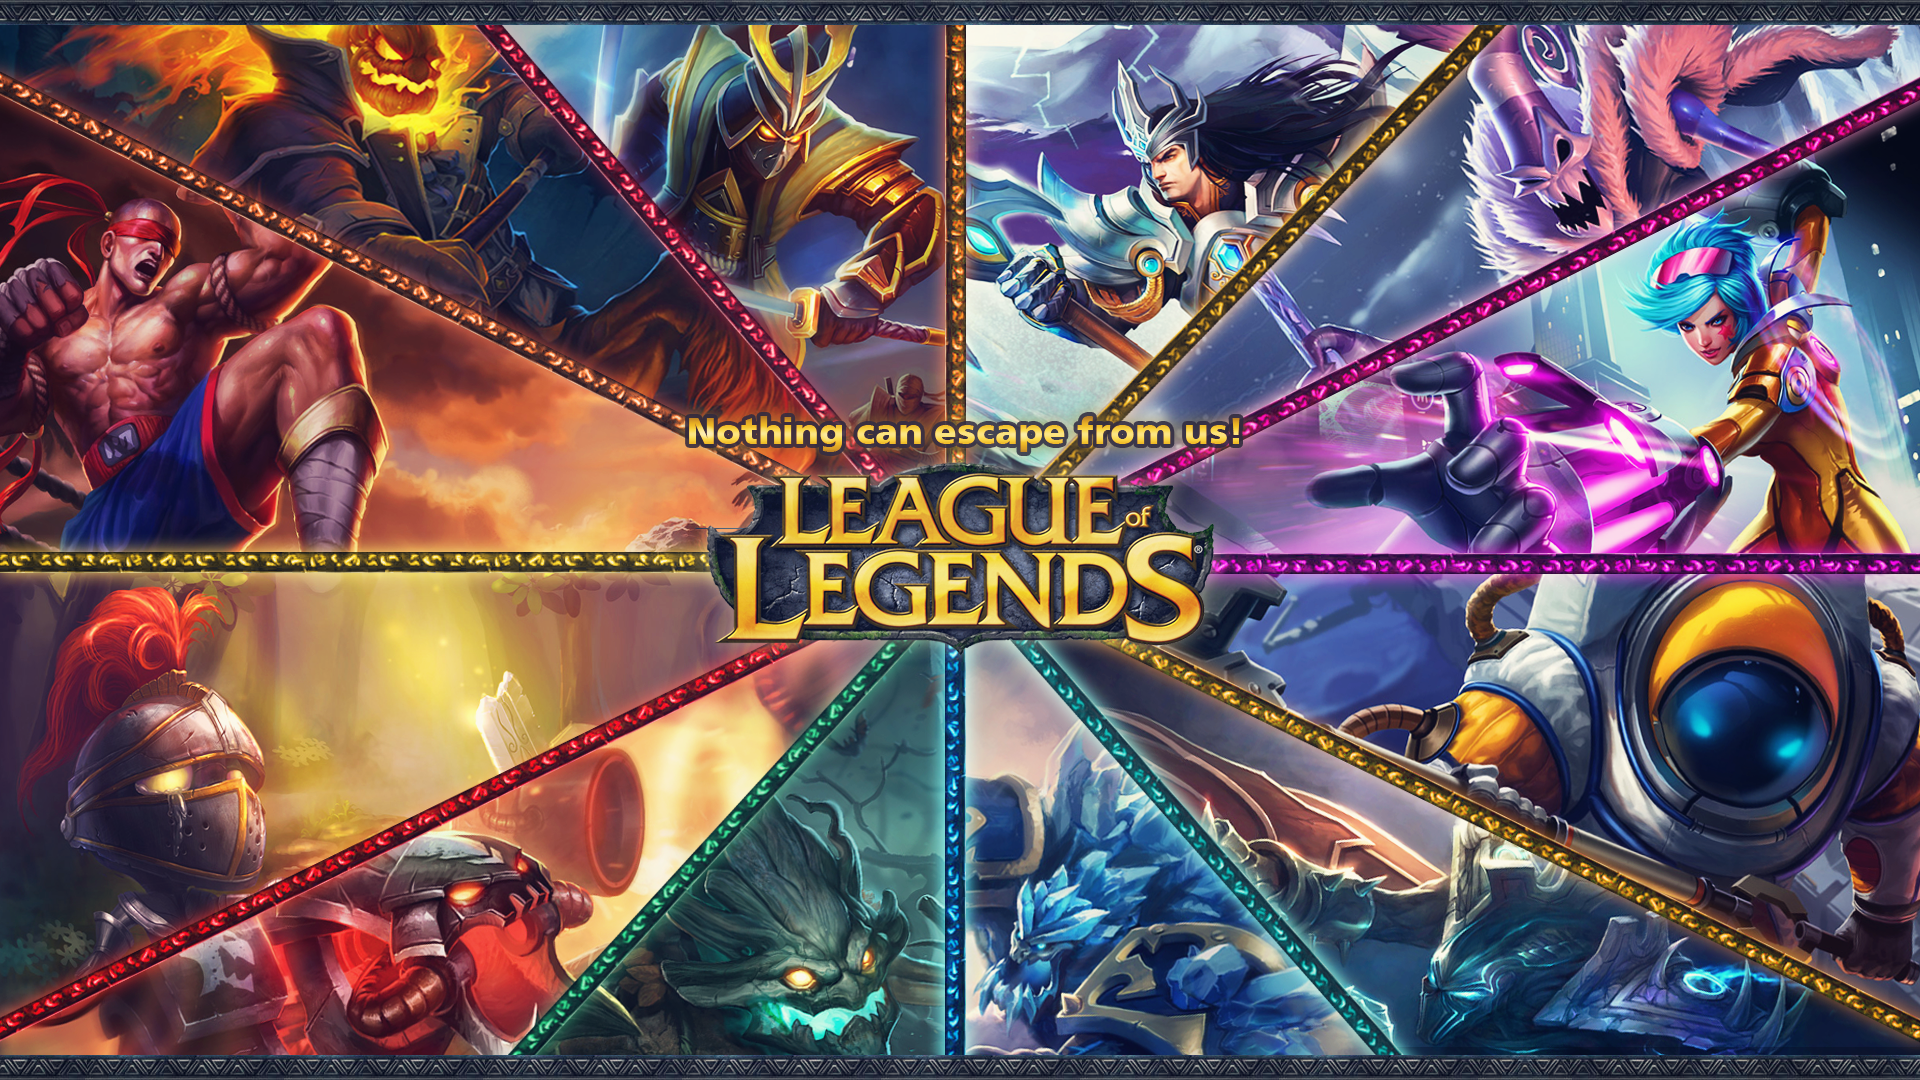 League Of Legends Jungle wallpaper. League of legends poster